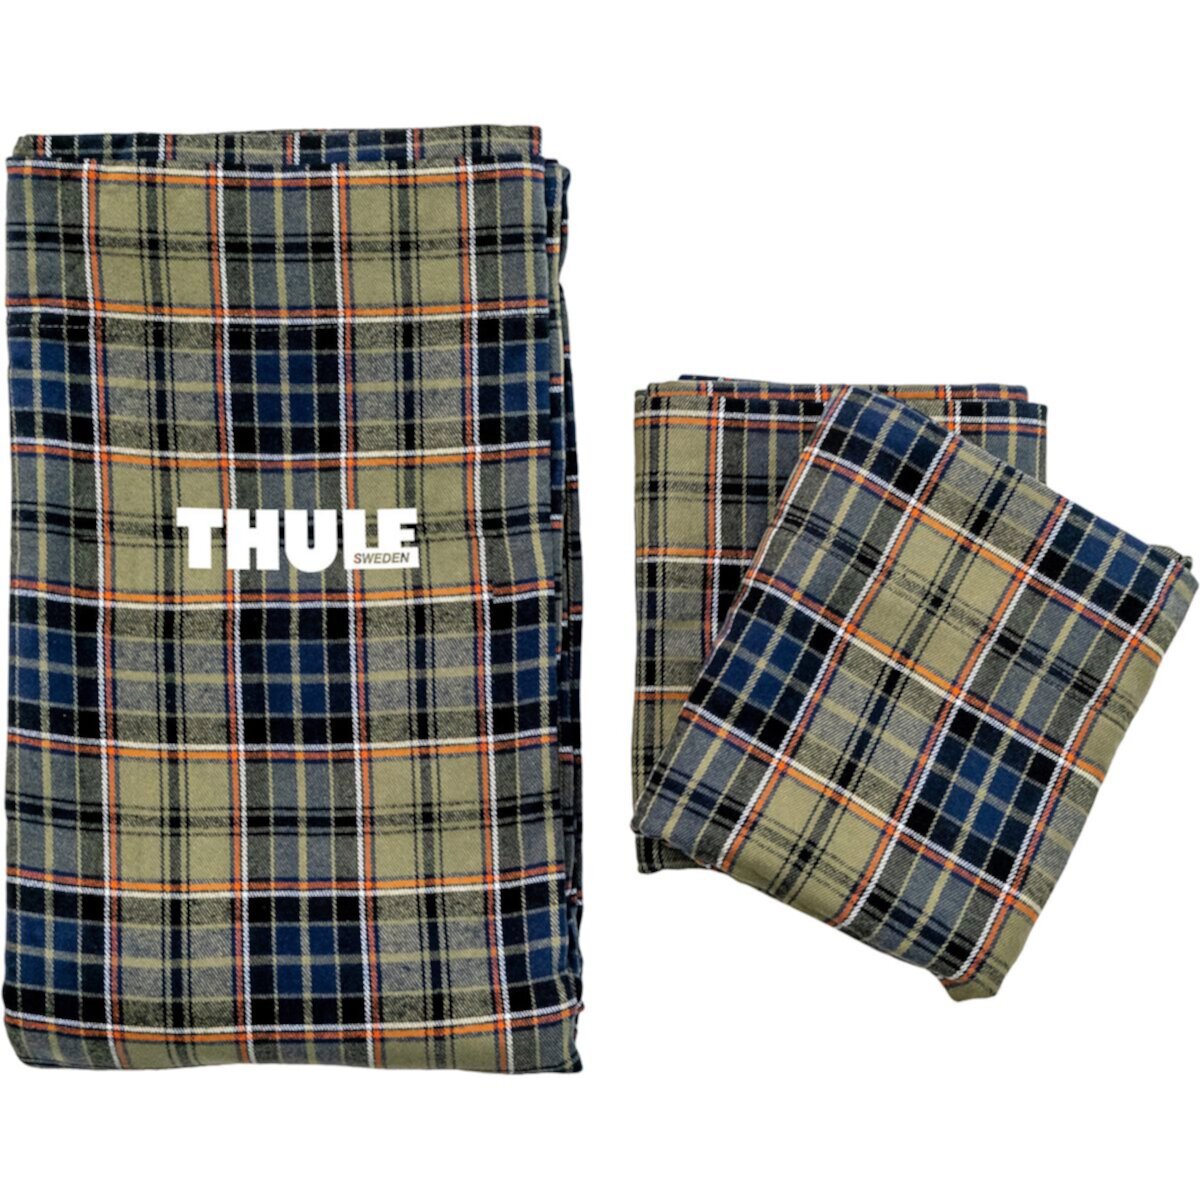 Фланелевые листы для двухместной палатки Thule Thule